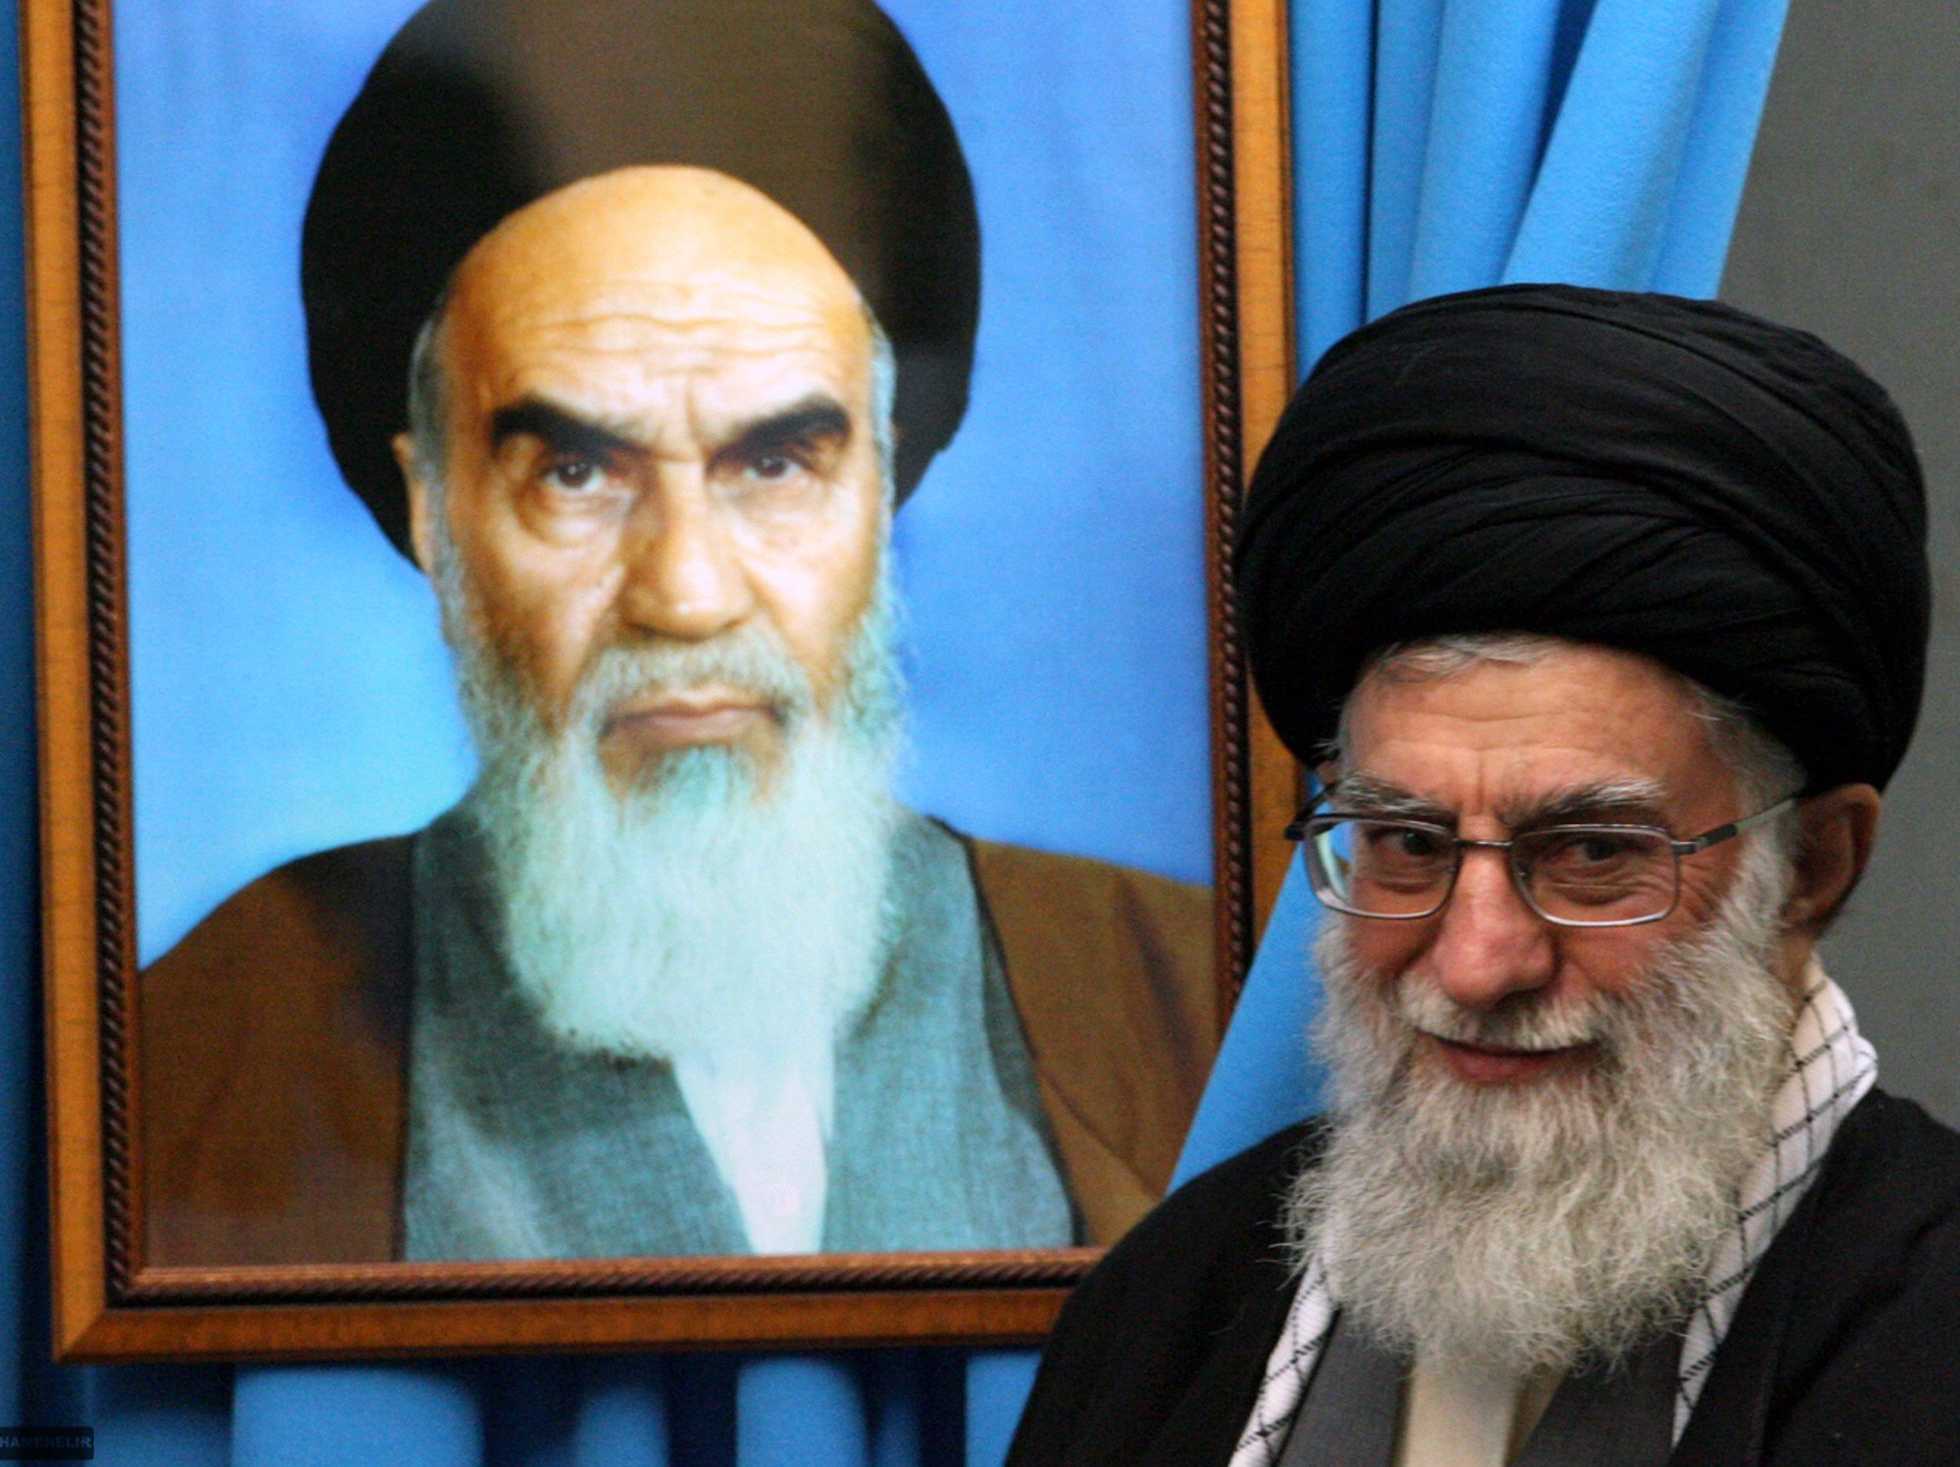 iranian-supreme-leader-khamenei-controls-a-vast-financial-empire-built-on-property-seizures